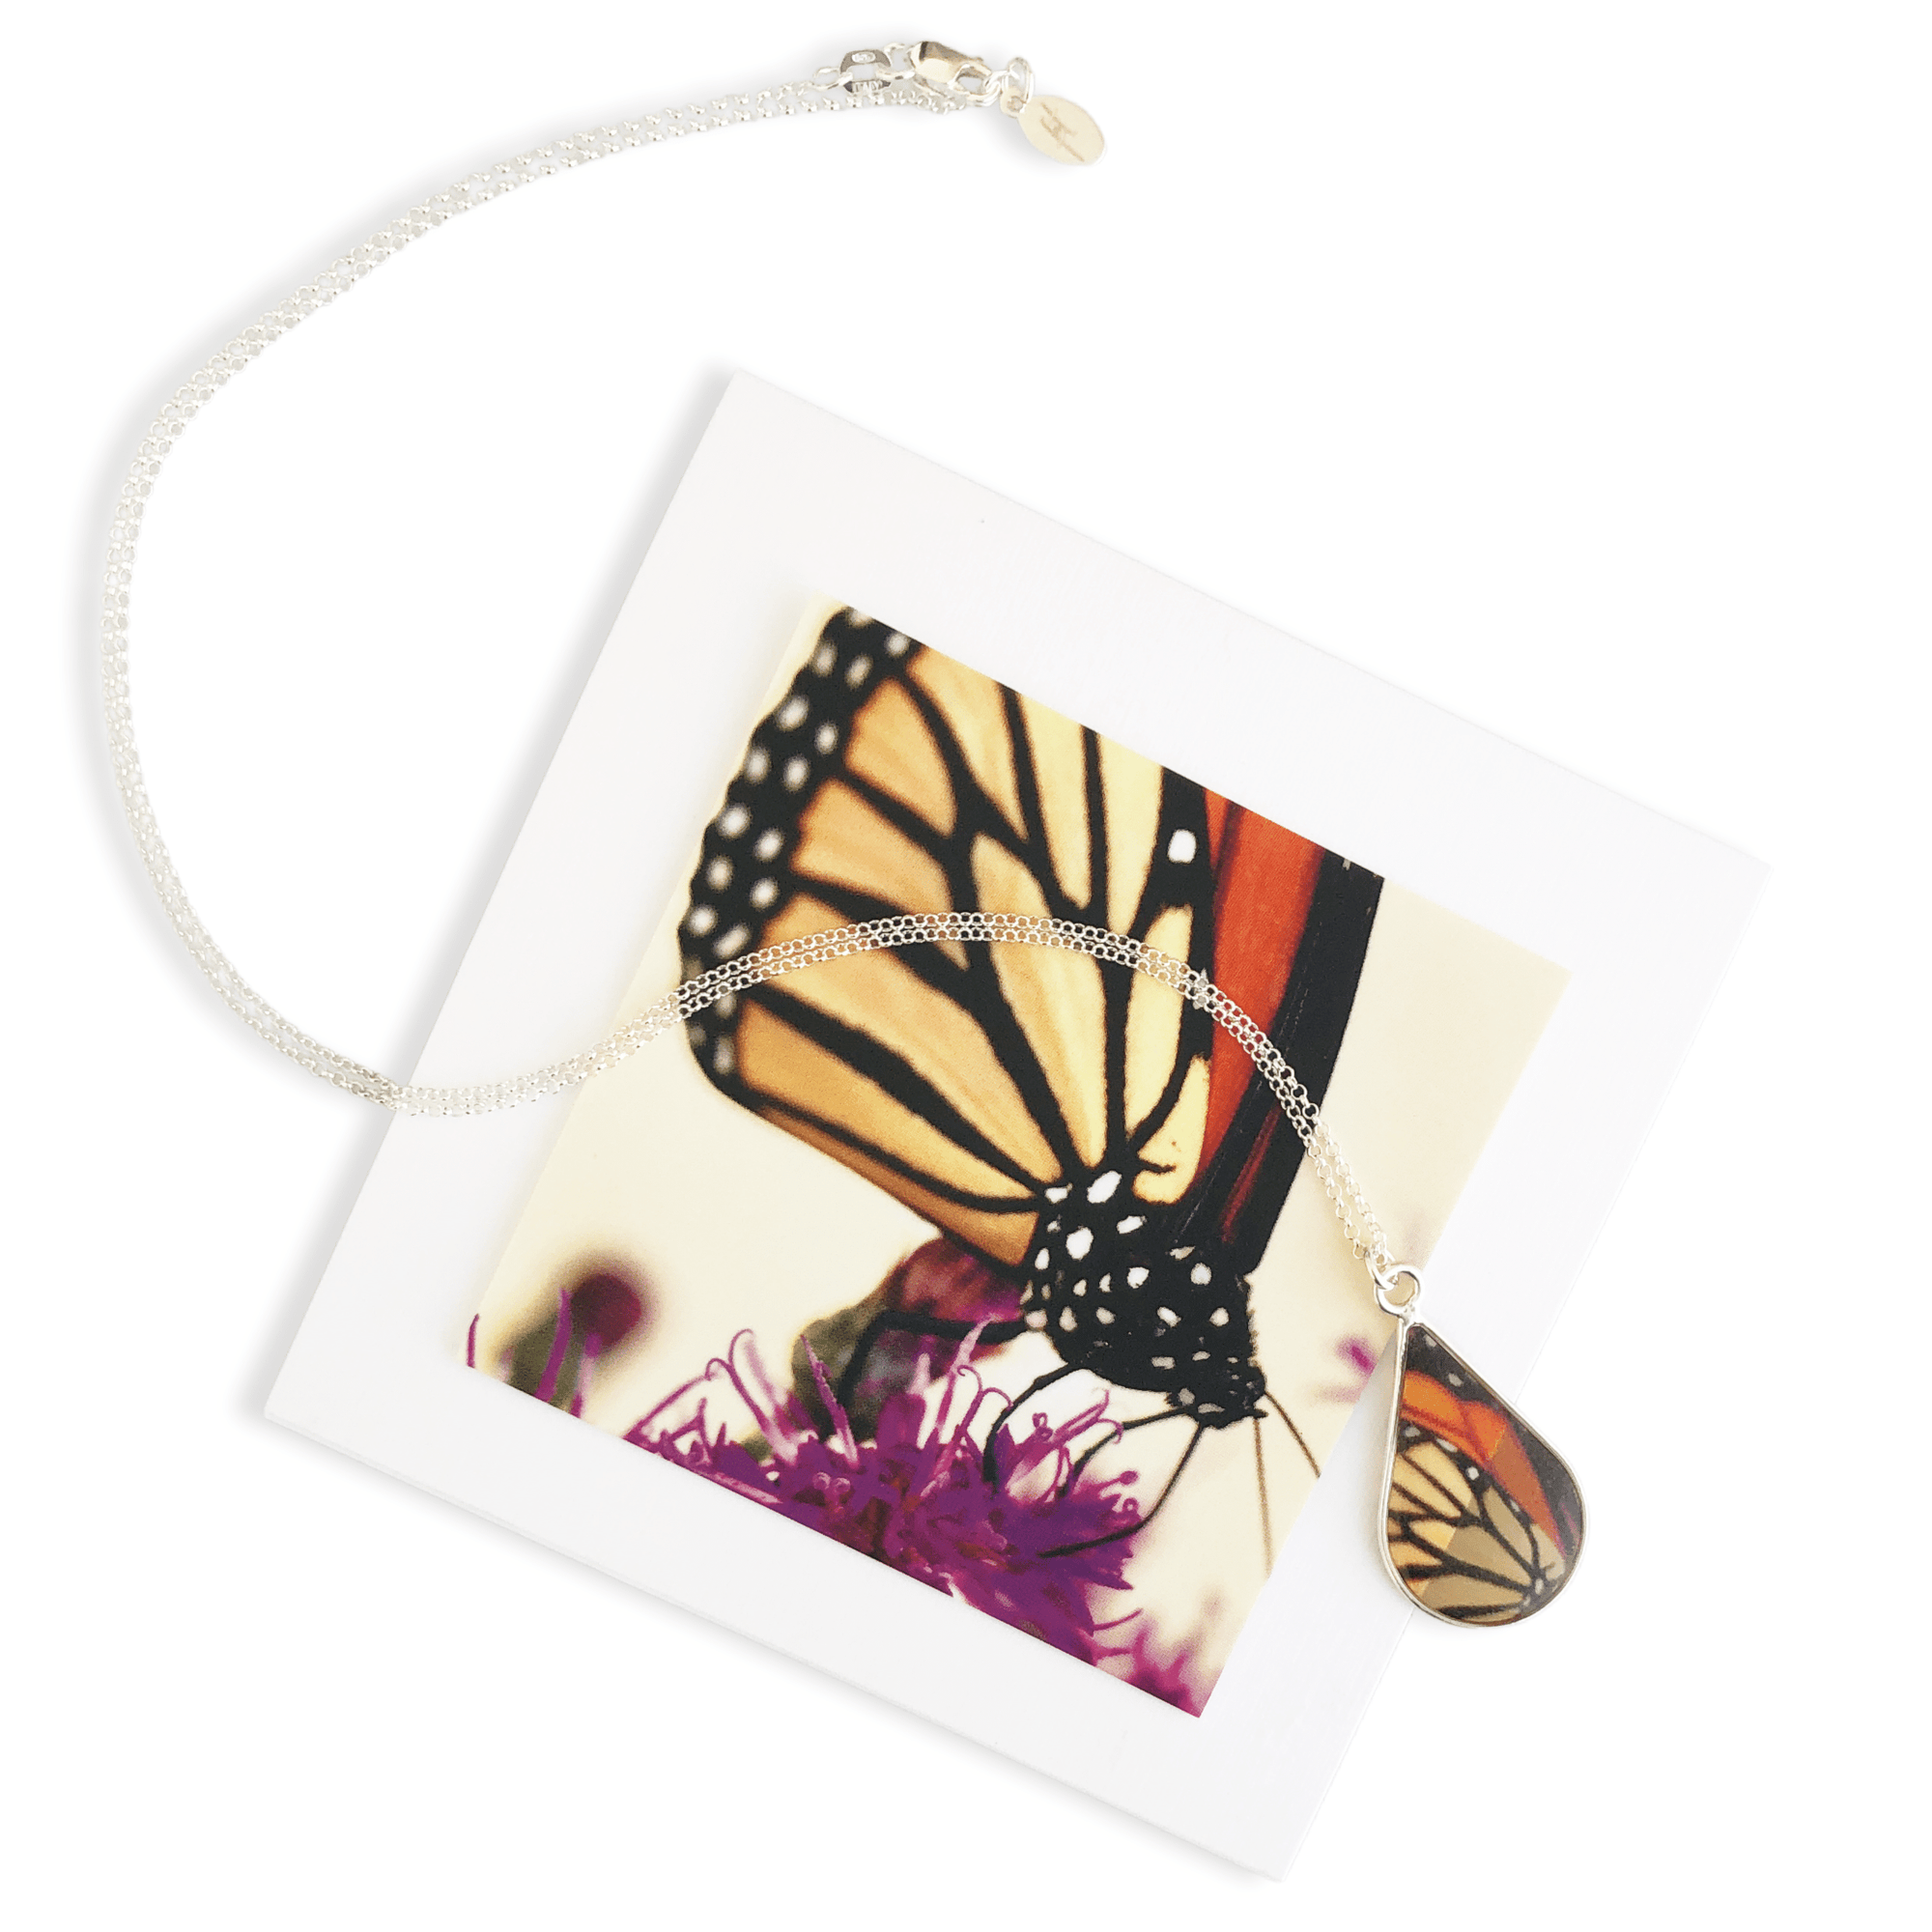 Monarch Butterfly Necklace by Kelly Kreger